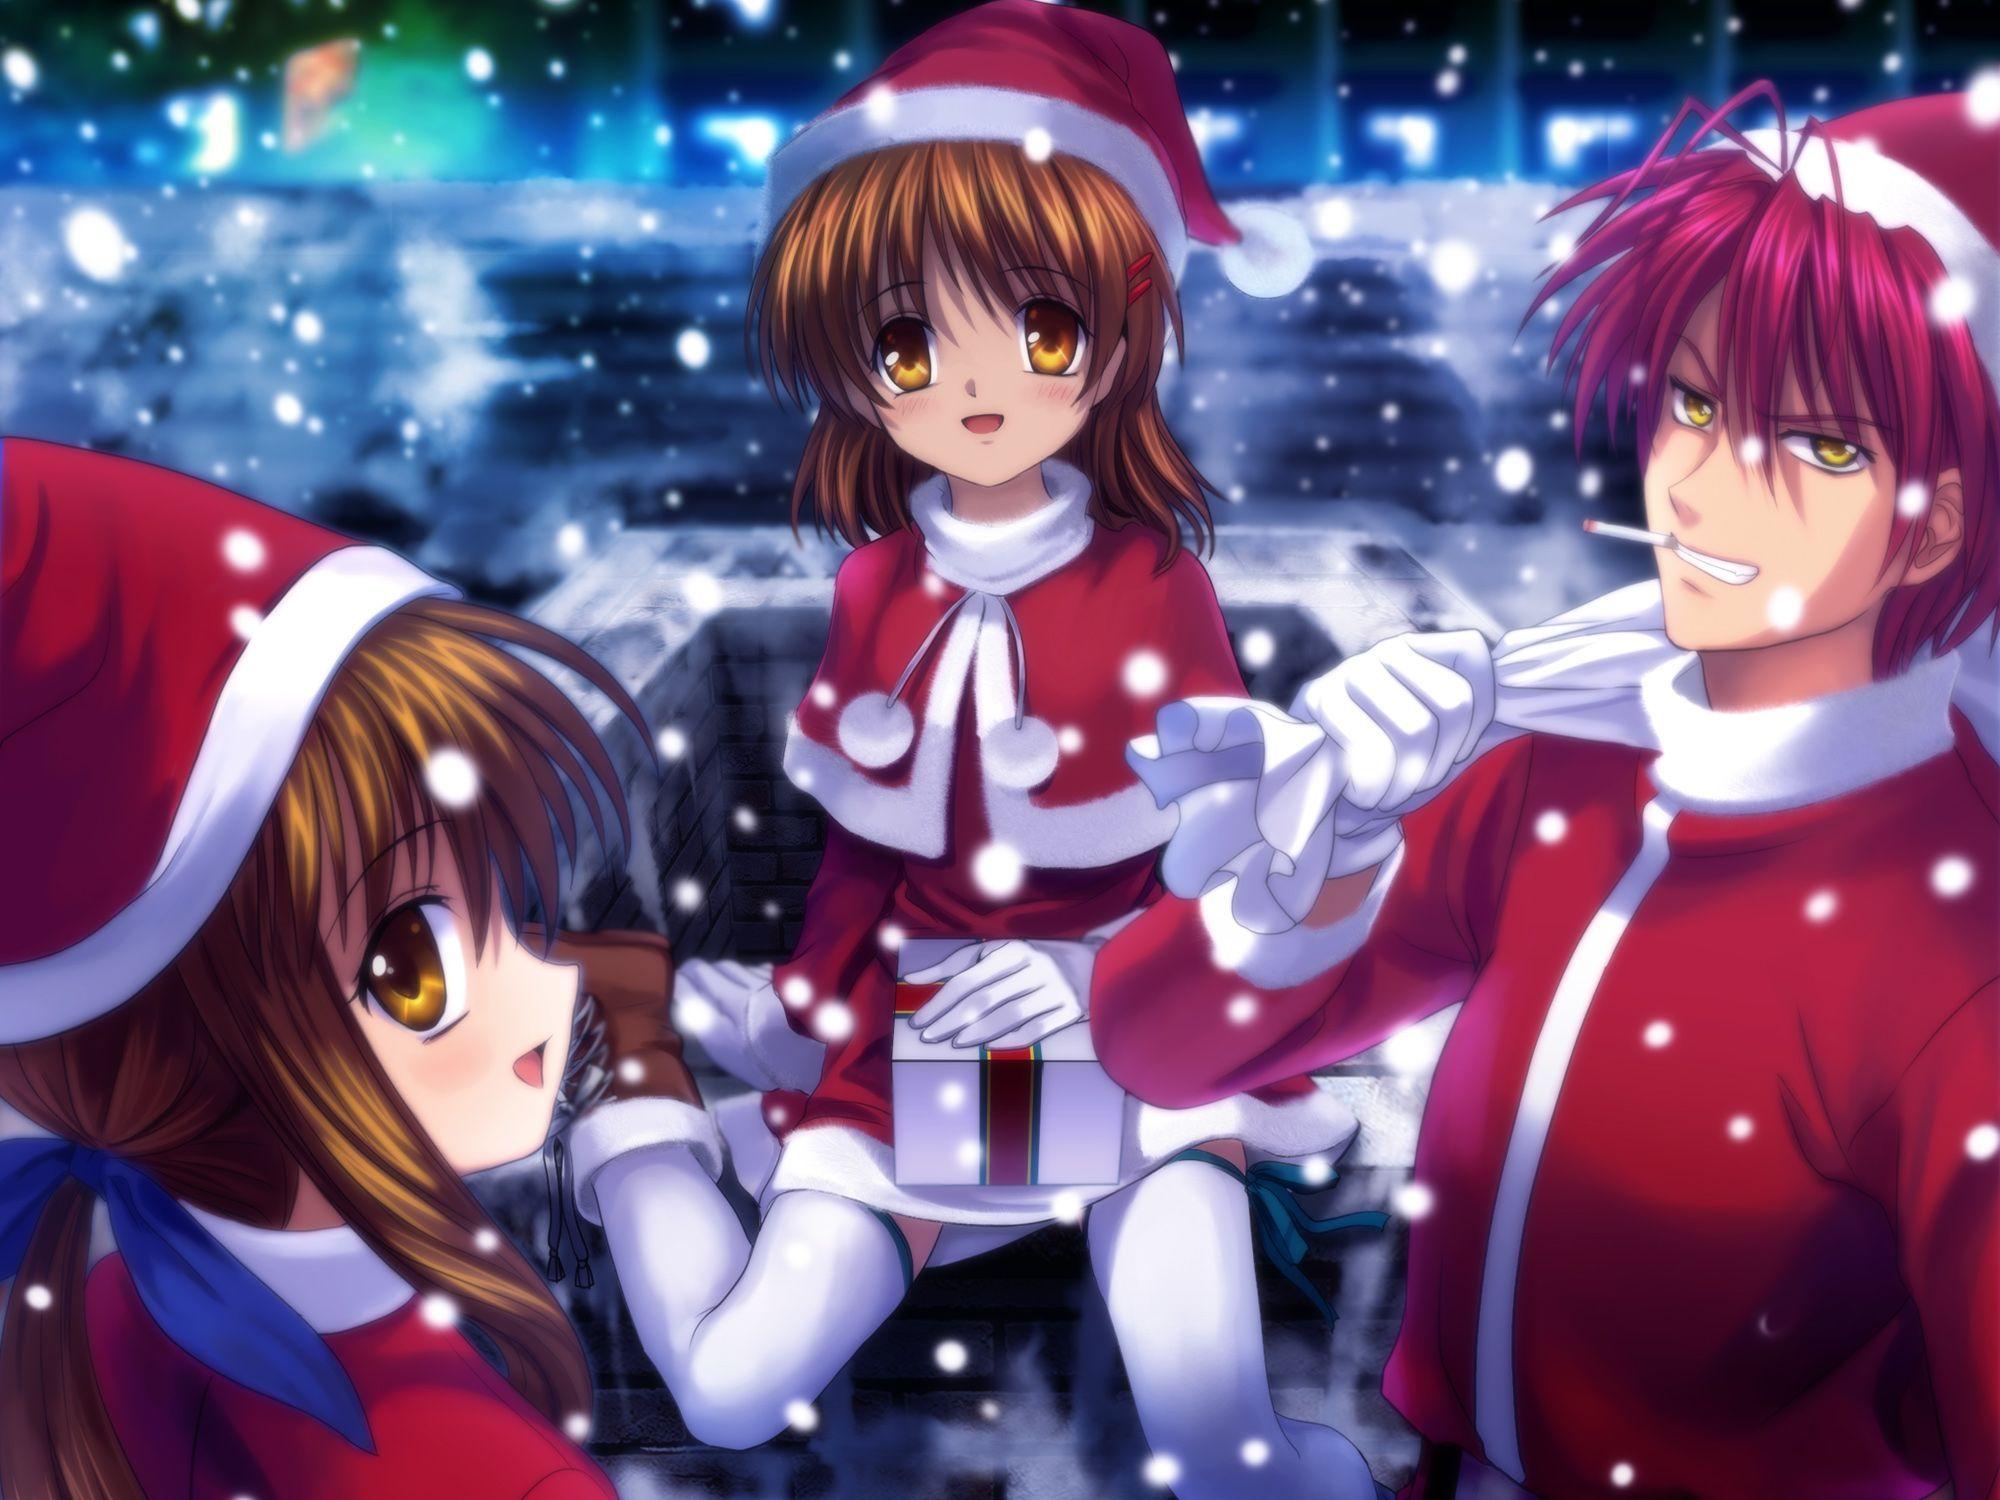 Anime Christmas Wallpaper Desktop. Christmas wallpaper HD